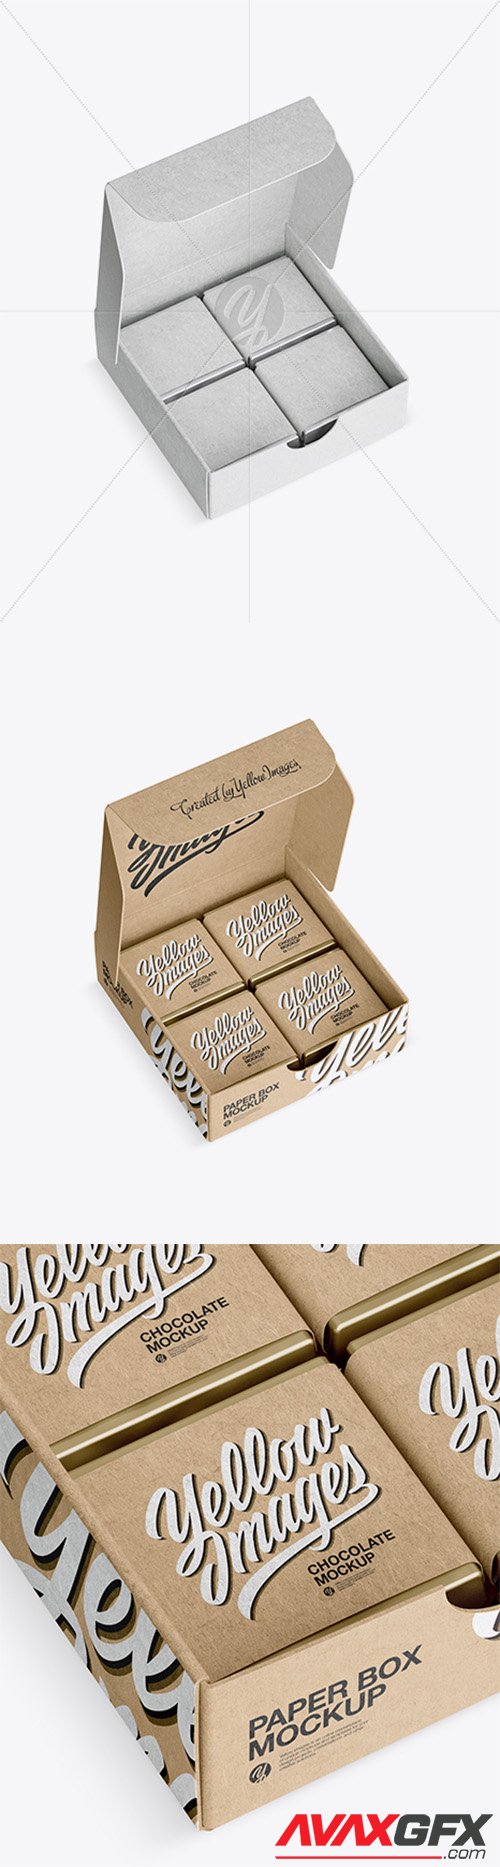 Opened Kraft Paper Box With Chocolates Mockup - Half Side View (High-Angle Shot) 23916